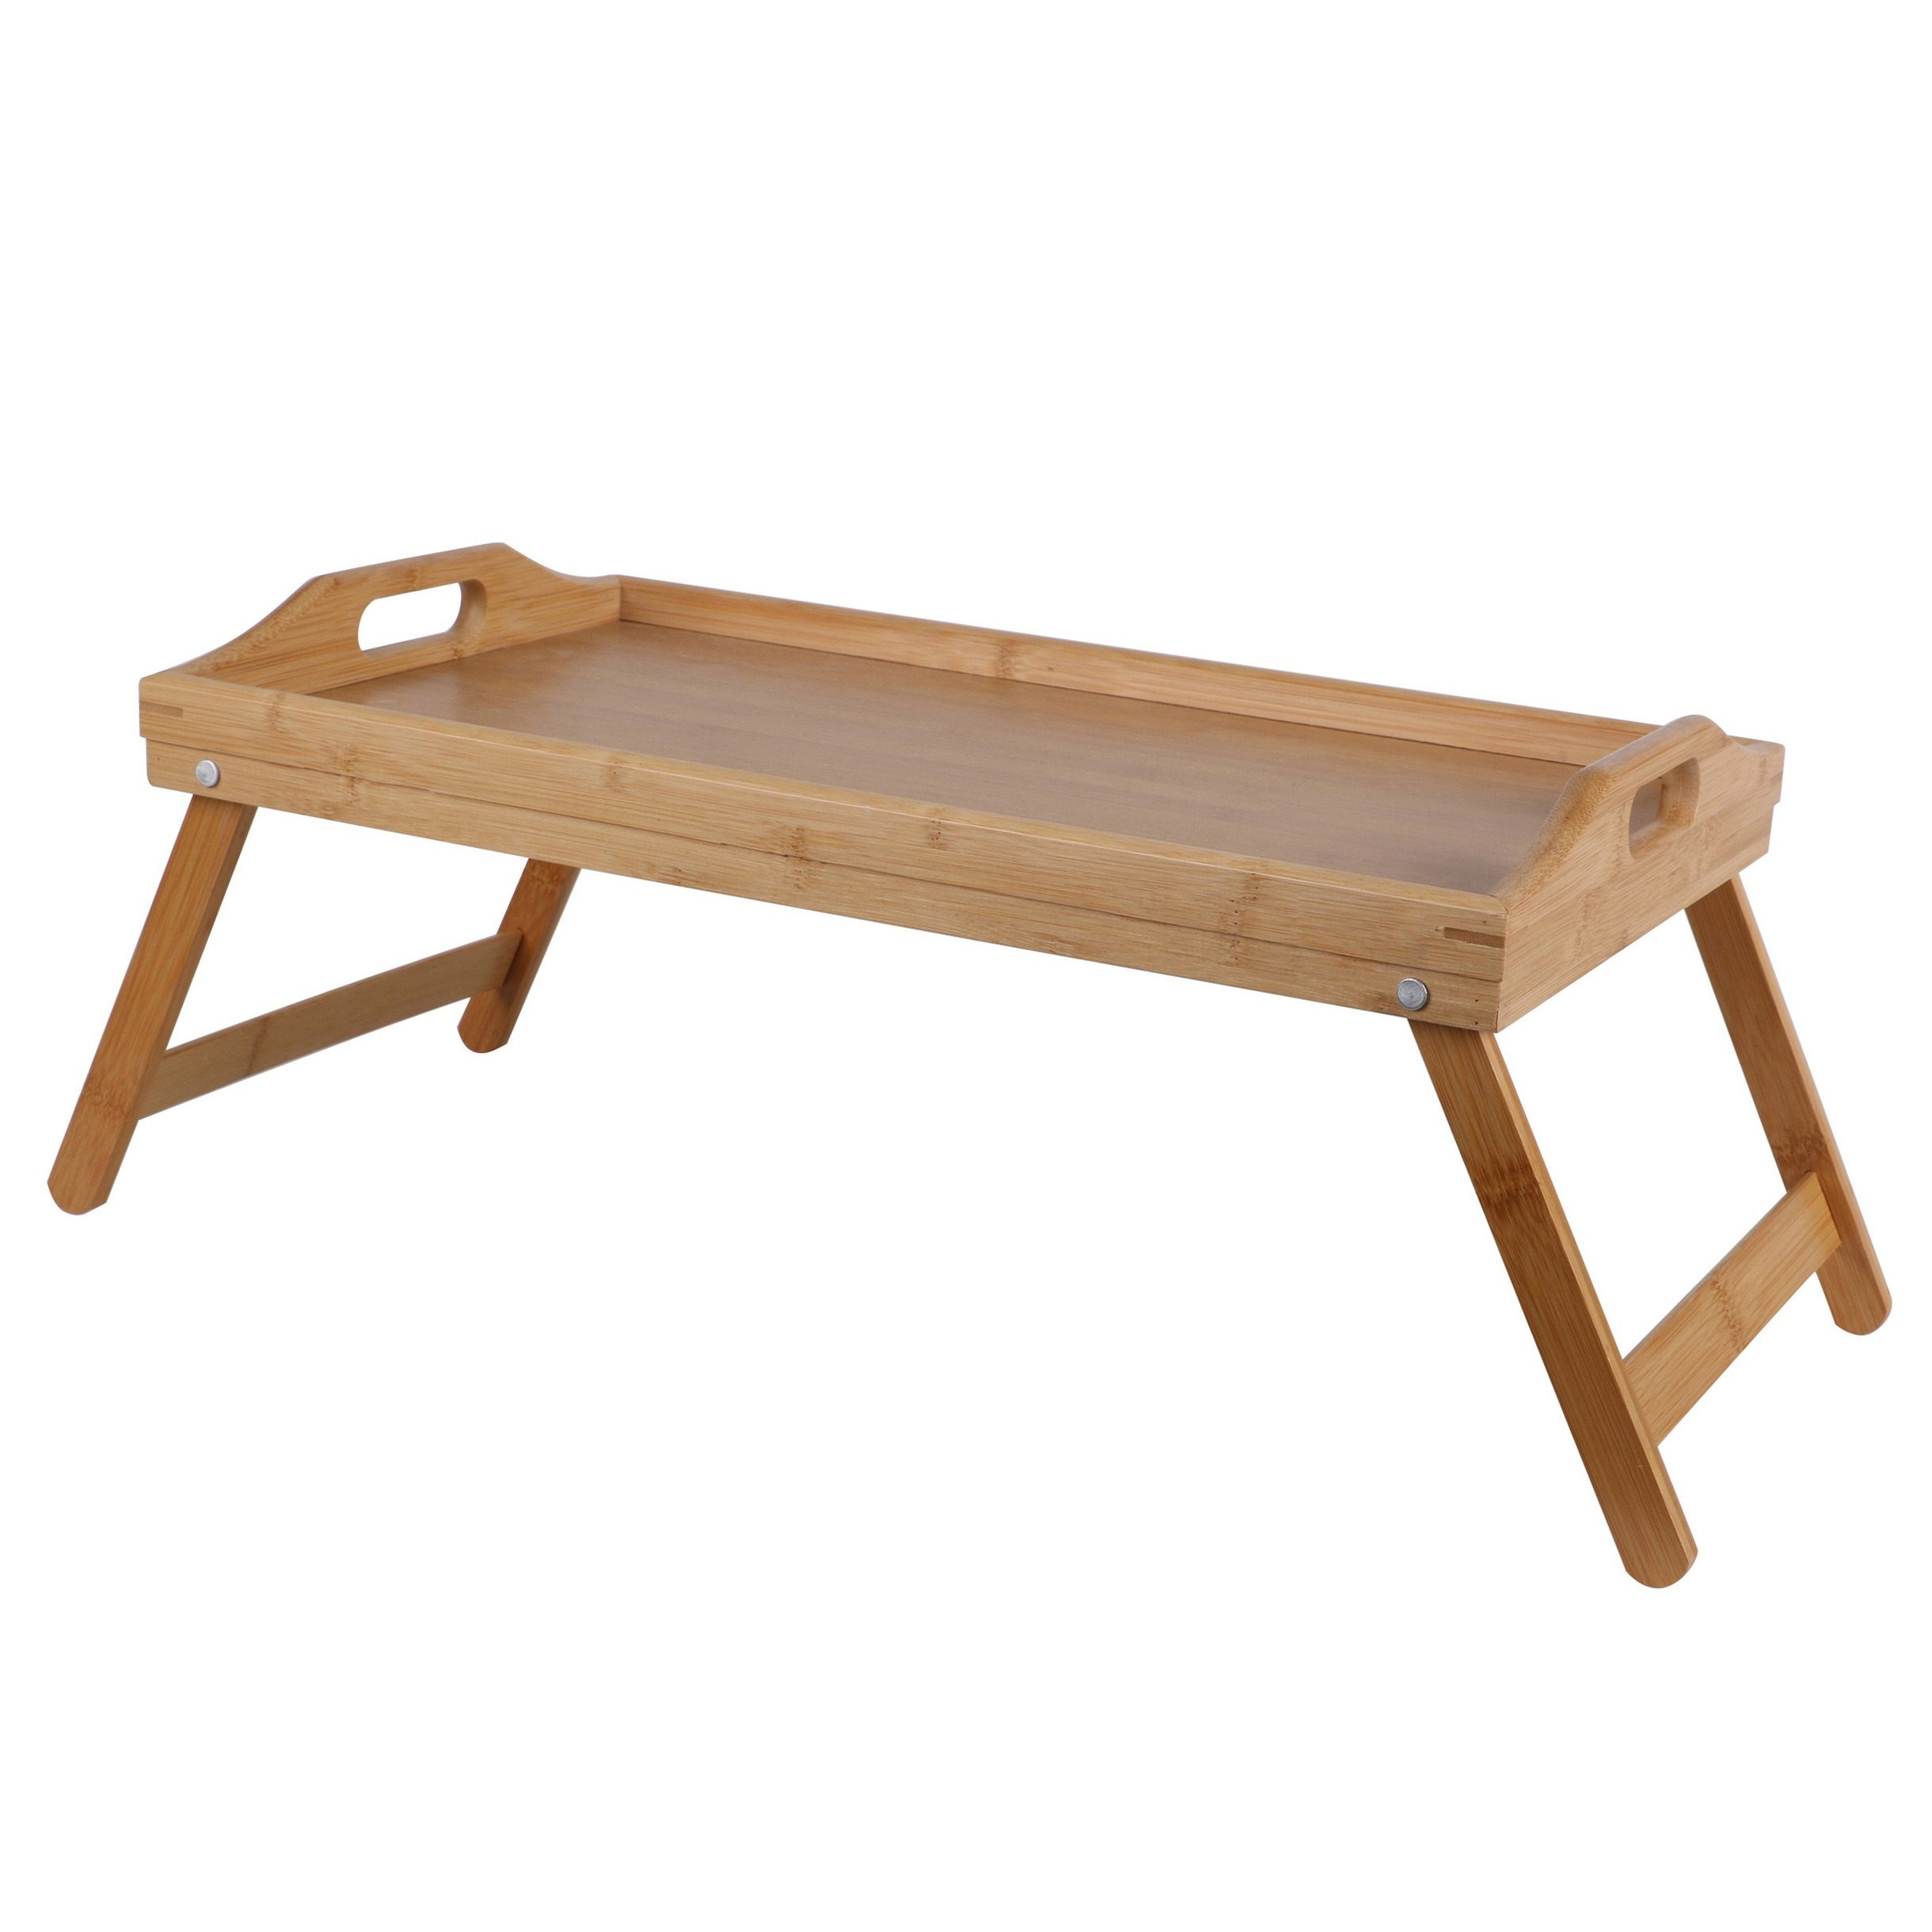 Bambou & Co Ontbijt op bed/laptop tafeltje/dienblad op pootjes - 53 x 33 x 21 cm - bamboe hout - serveer tray -